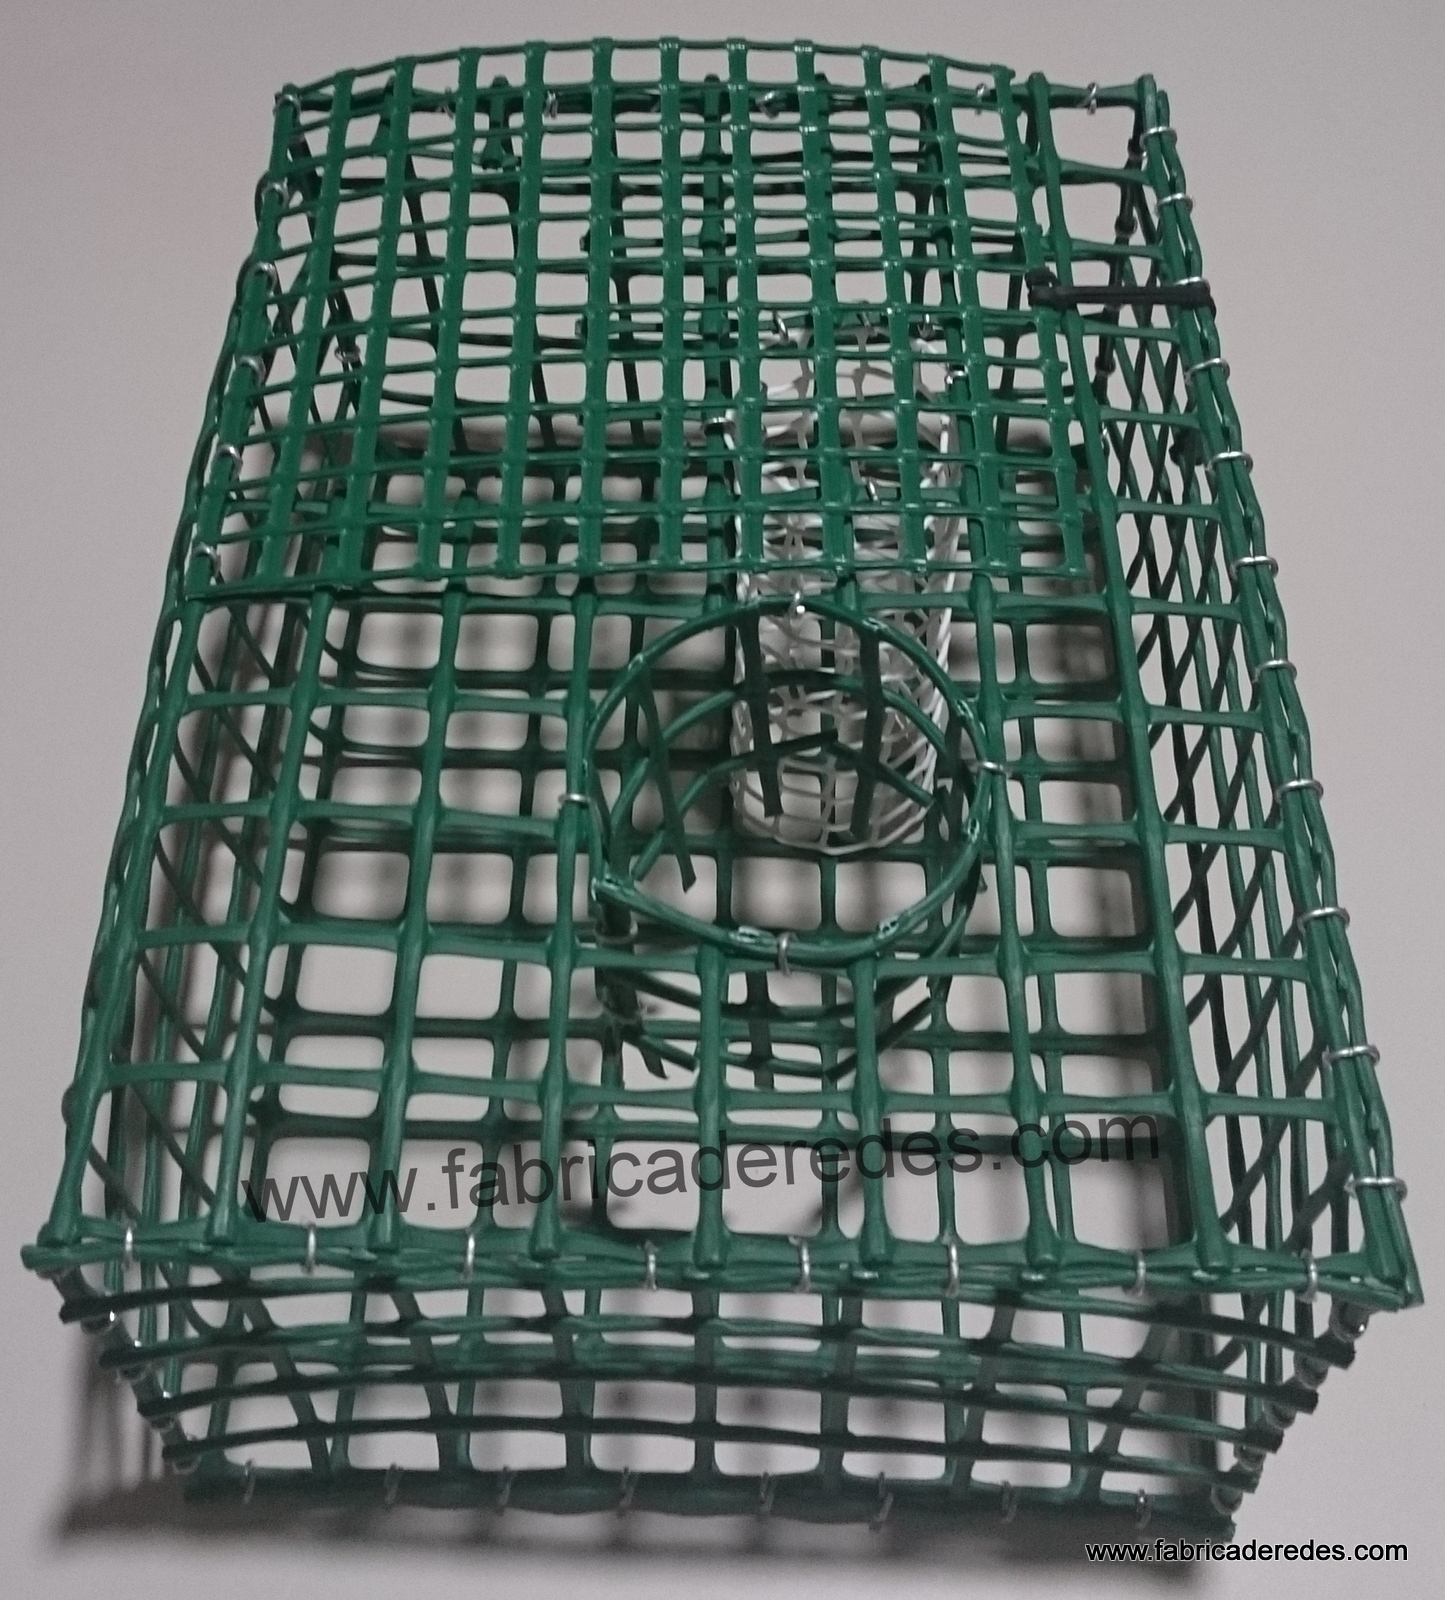 Square mesh trap rectangle